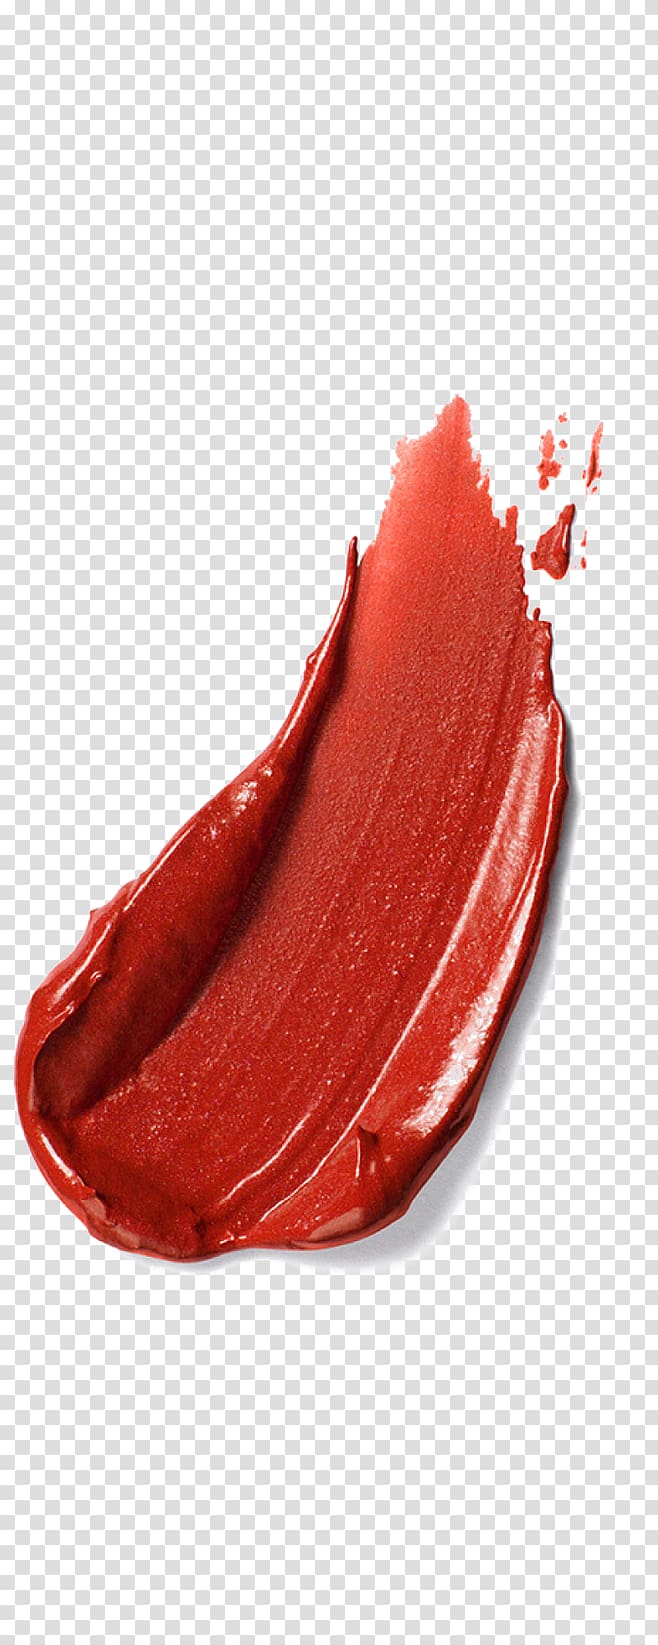 Lipstick Cosmetics Color, Cosmetics Lipstick transparent background PNG clipart